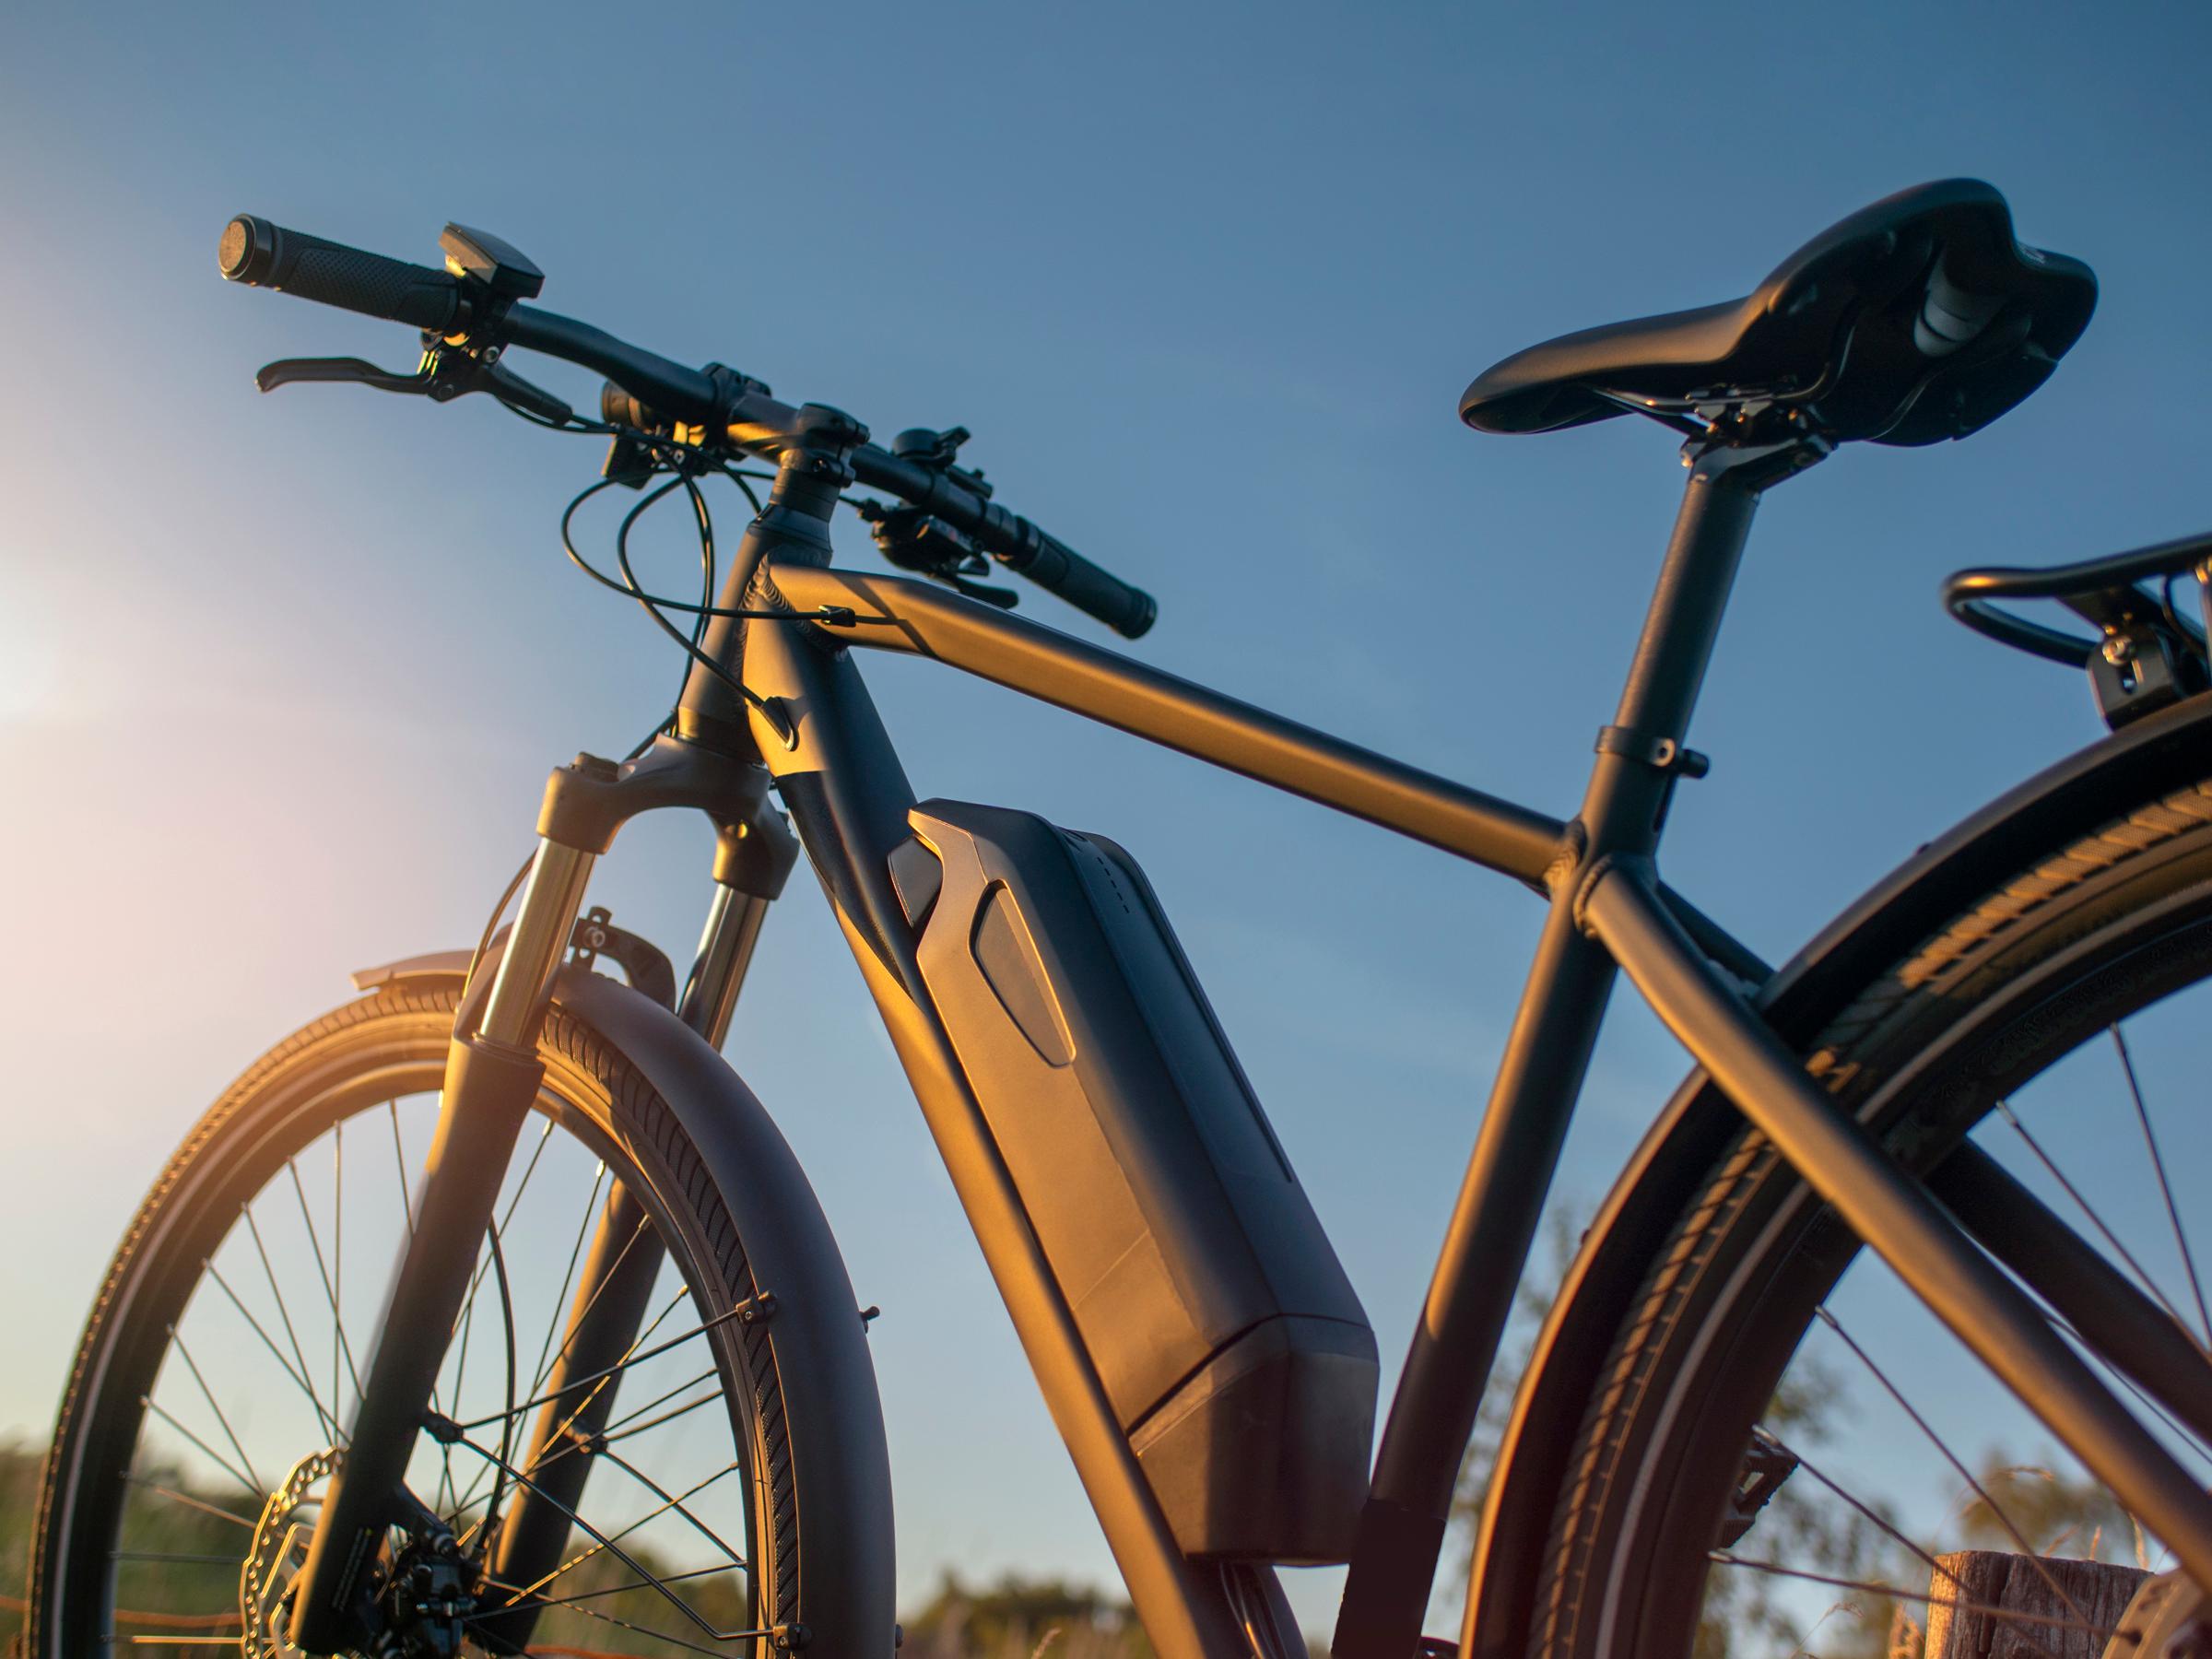 Cykel der står portrættert idylisk mod solens korona